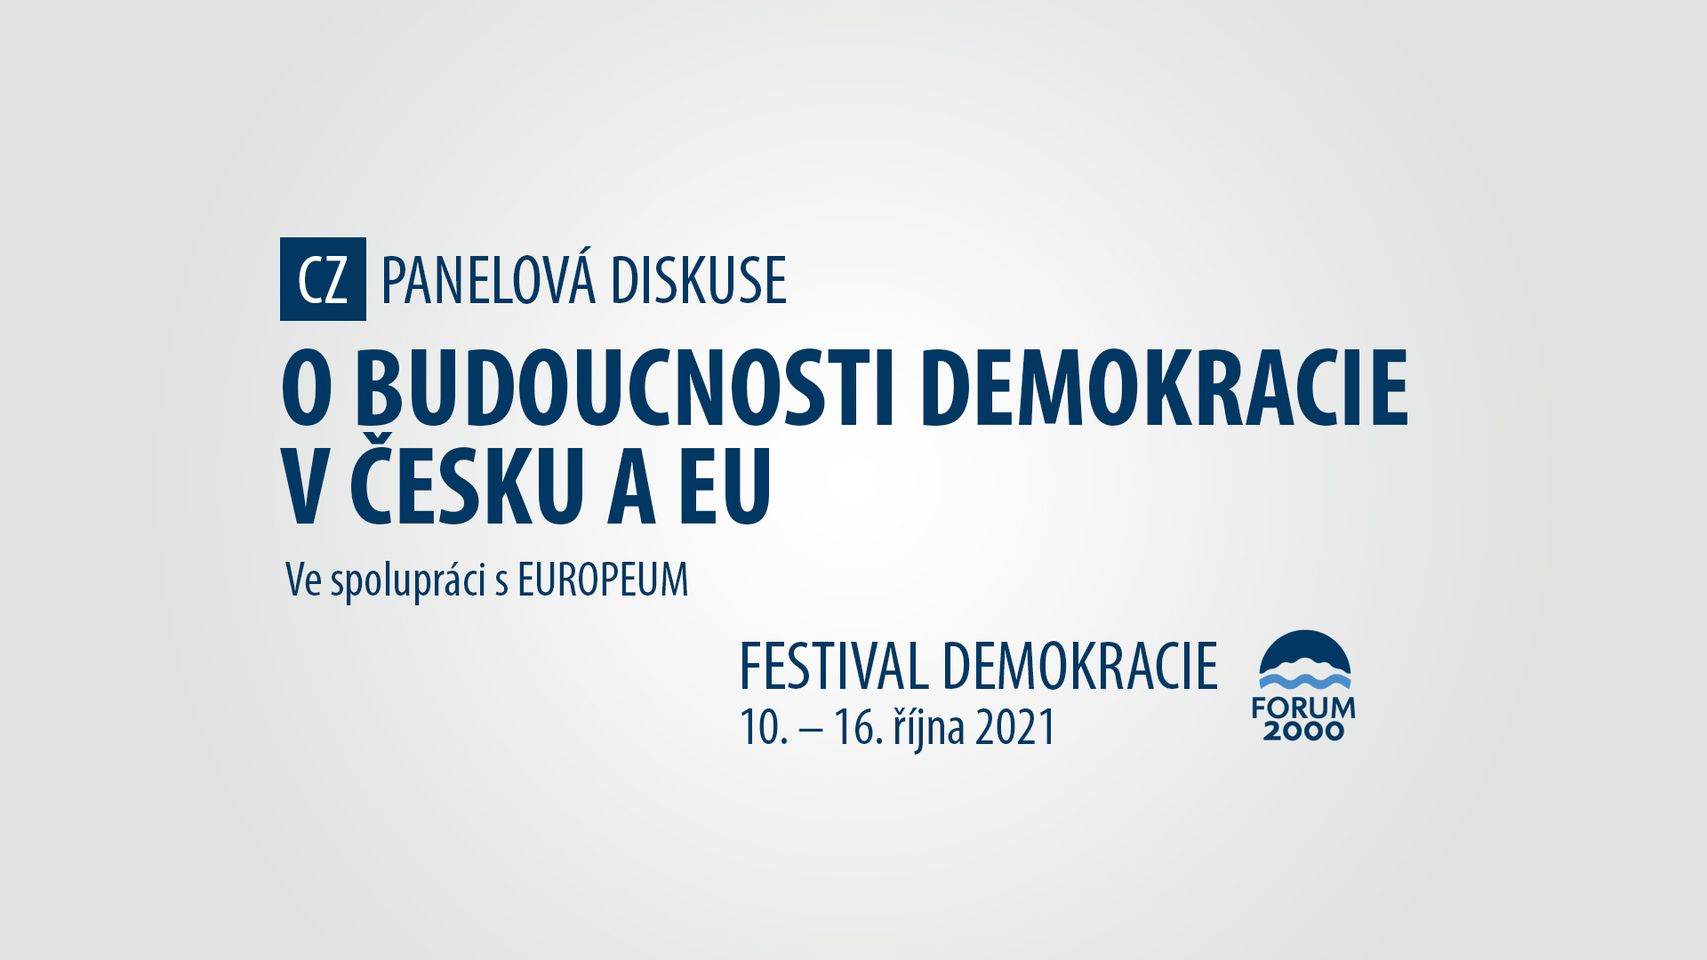 pozvanka_forum_2000_budoucnost_demokracie.jpg